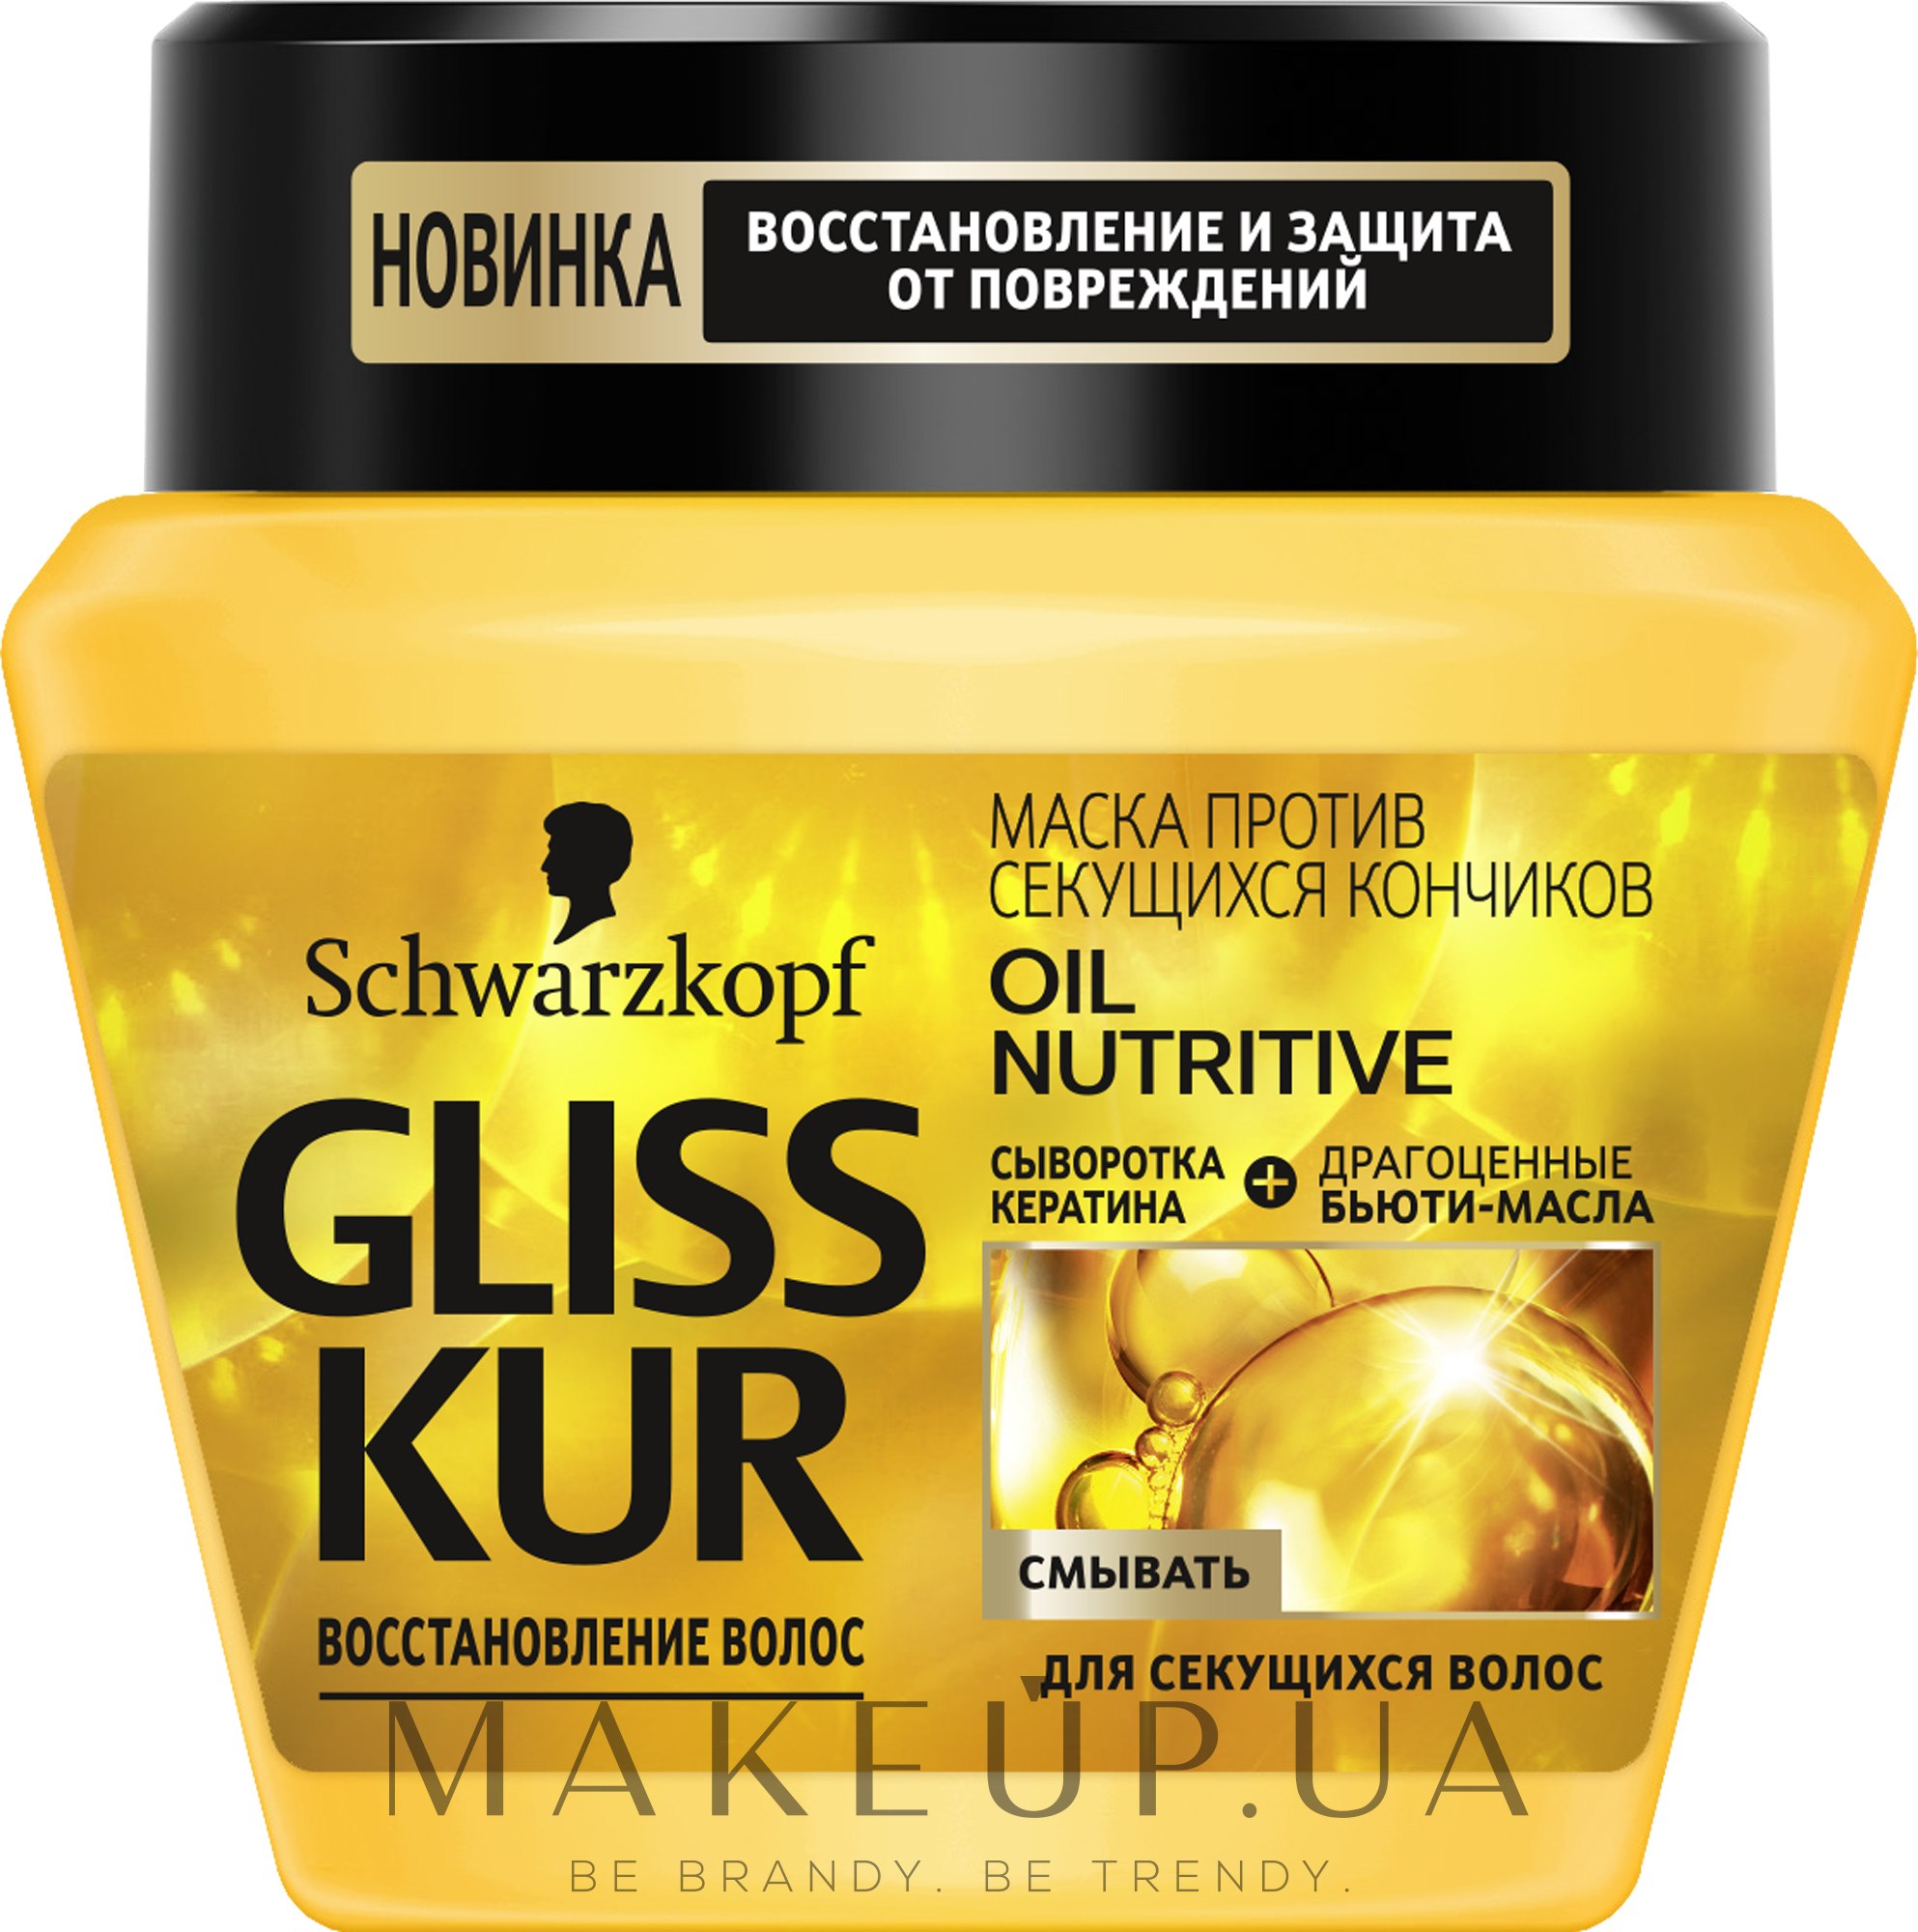 Бальзам маска для волос отзывы. Gliss Kur маска для волос. Oil Nutritive маска для секущихся волос Gliss Kur. Gliss Kur маска 300мл в асс. Маска для волос желтая Gloss Kur.